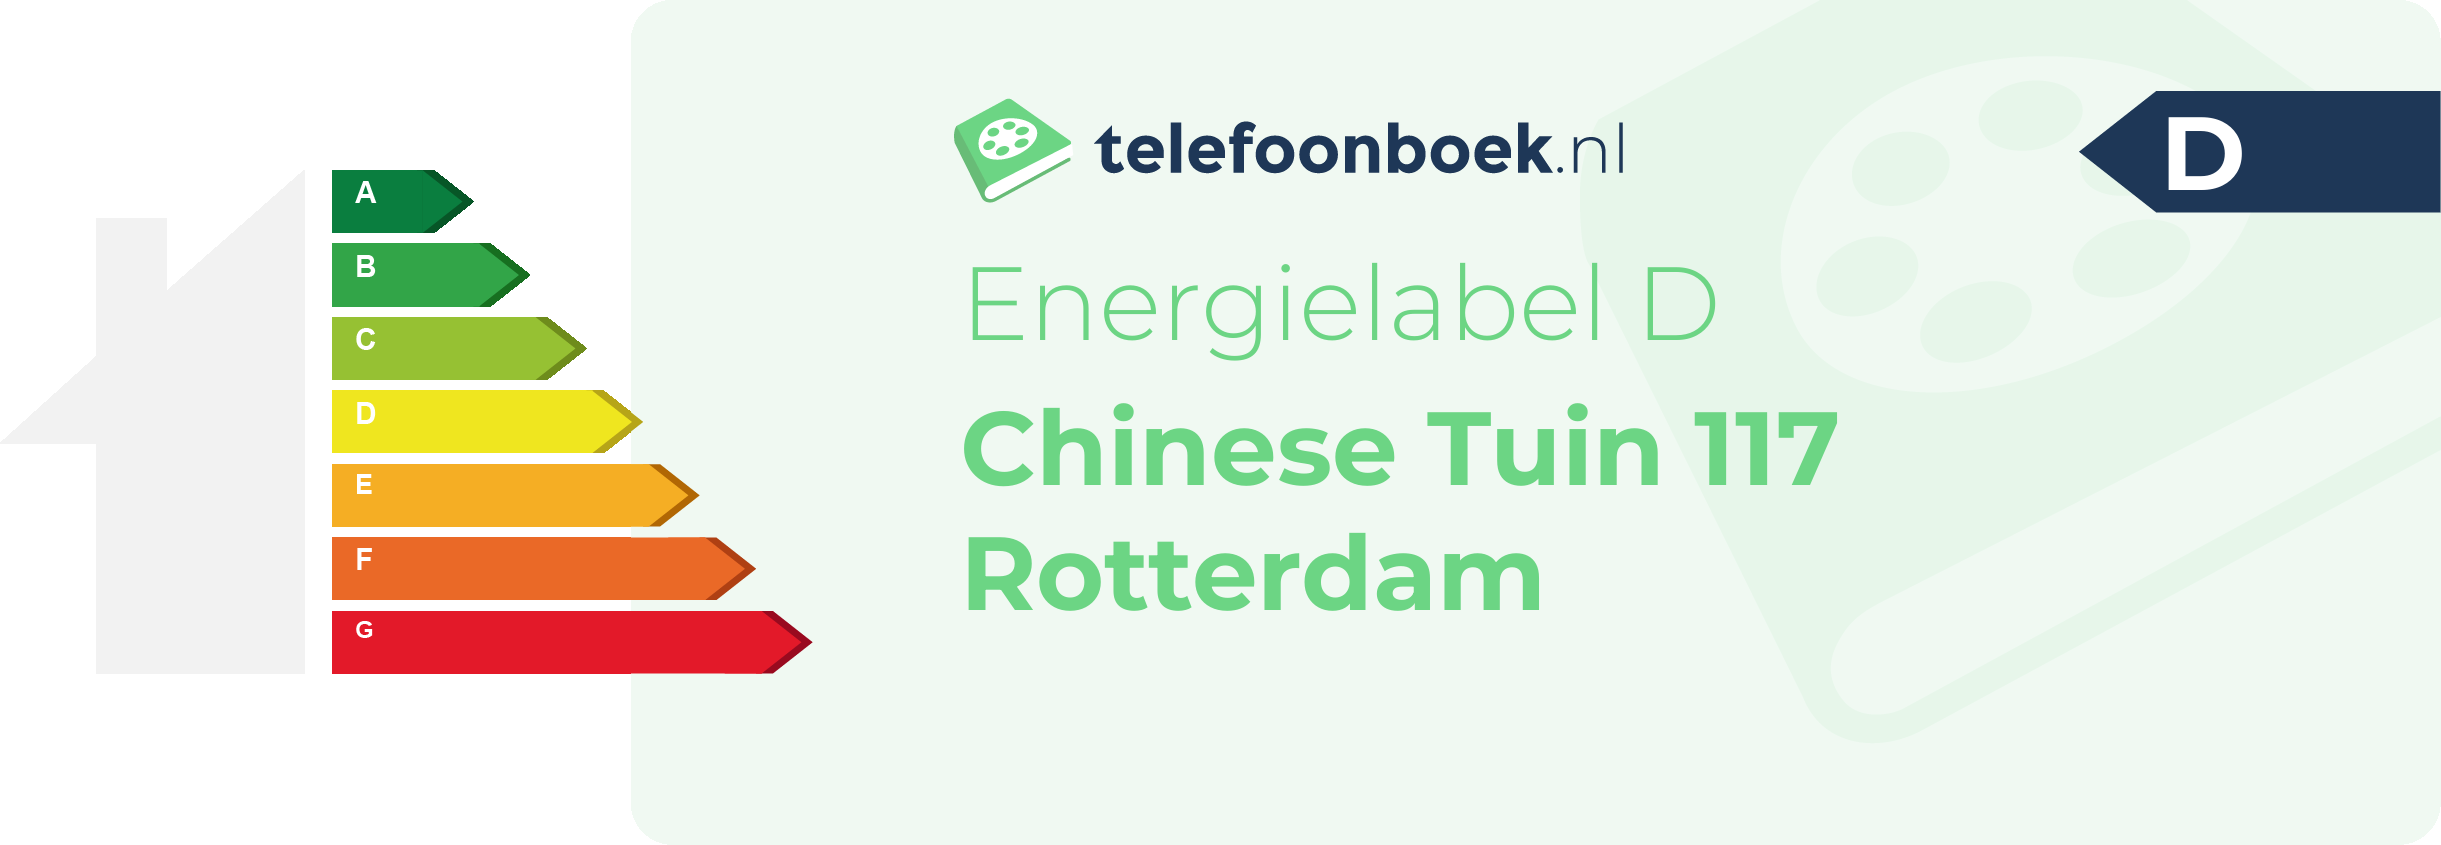 Energielabel Chinese Tuin 117 Rotterdam